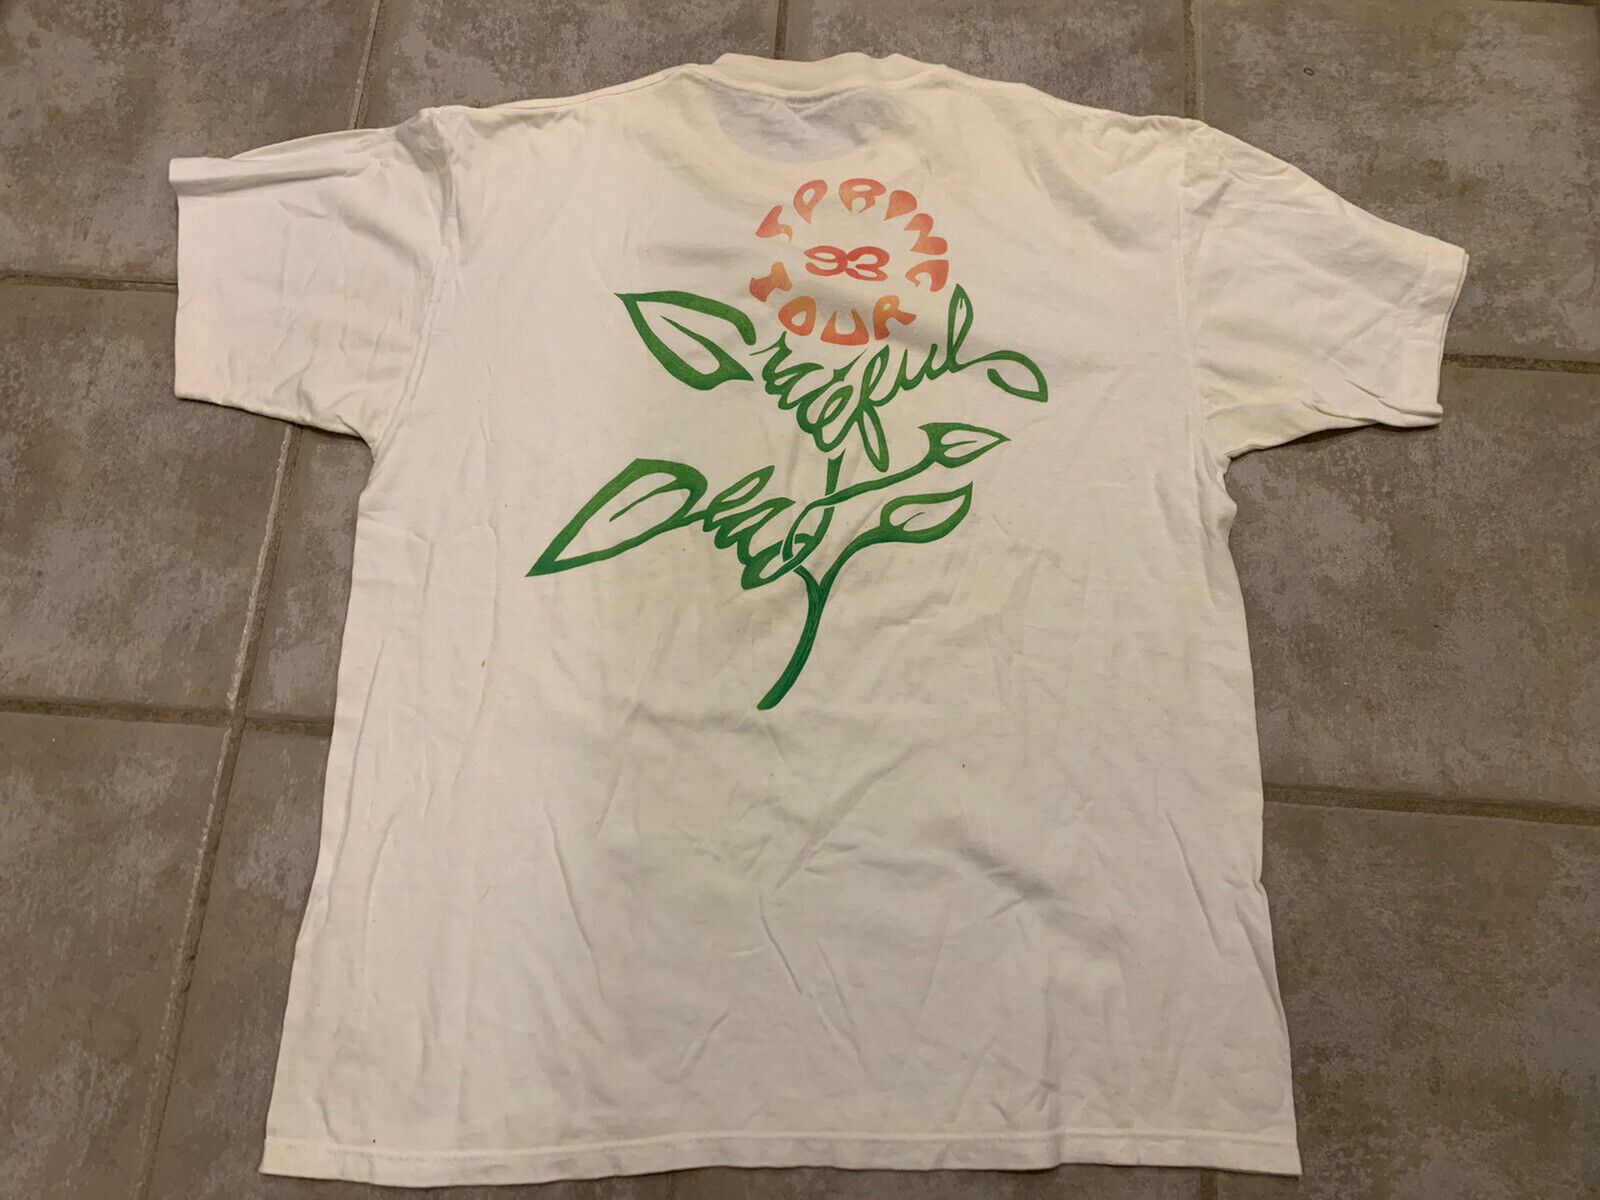 VINTAGE Grateful Dead Shirt 1993 Spring Tour jerry garcia XL VERY RARE Jam Band